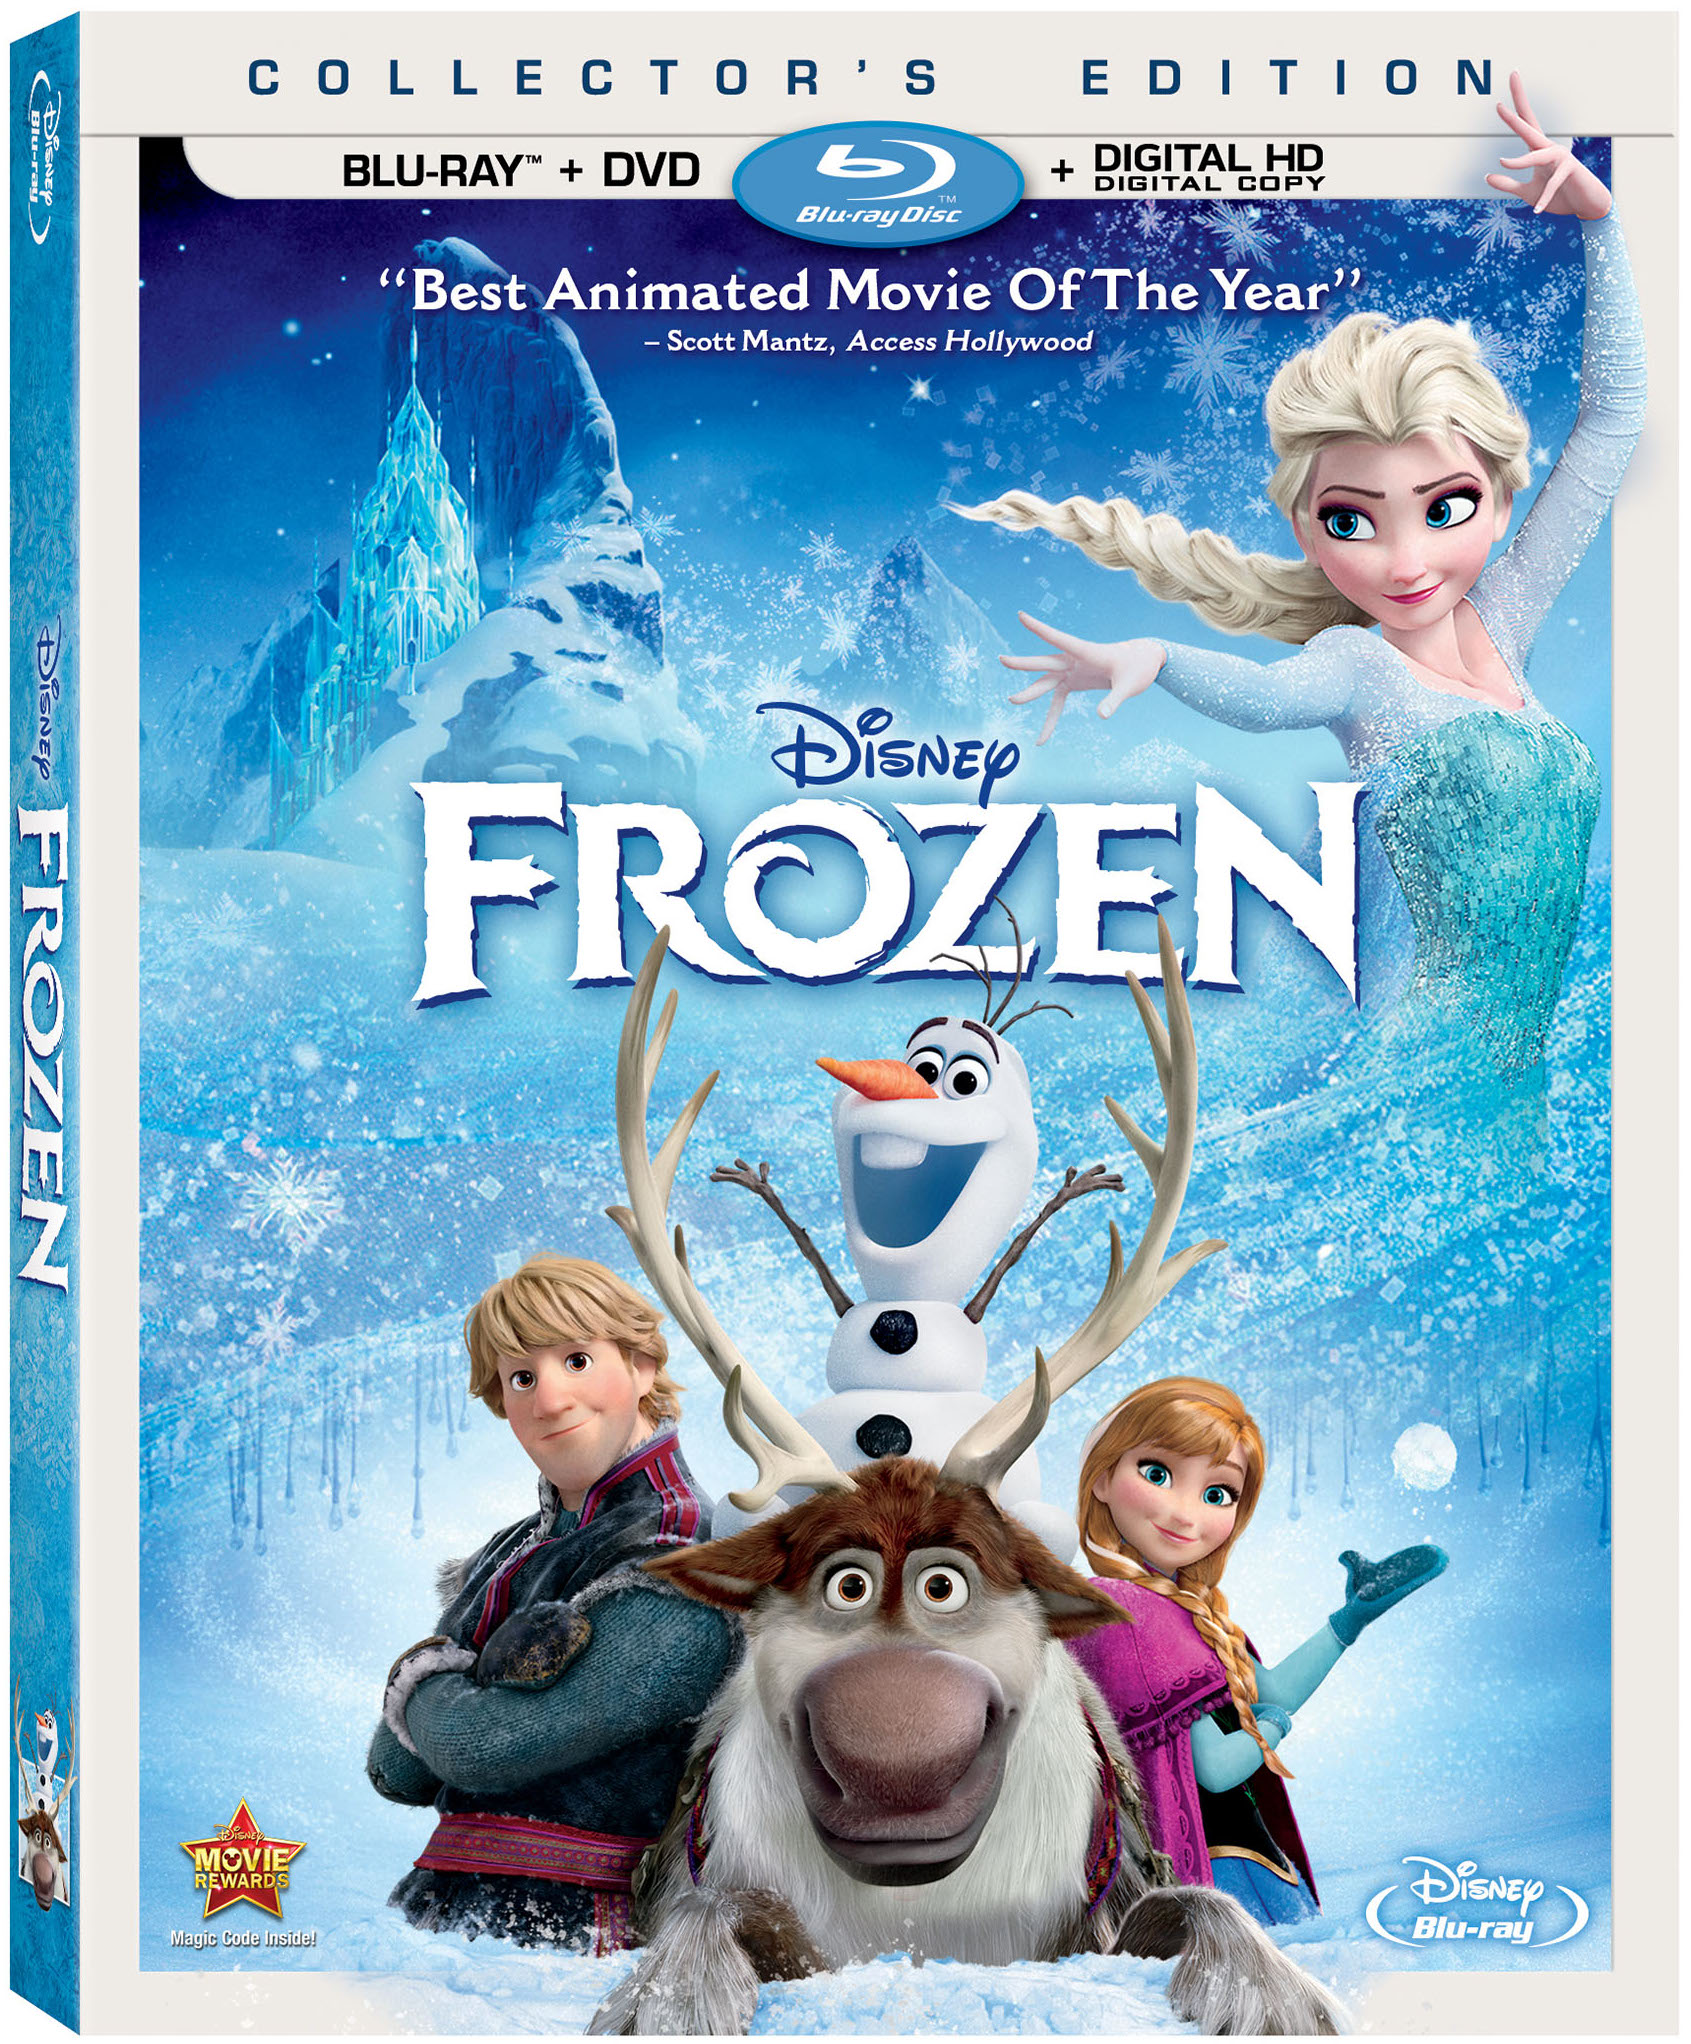 Disney’s Frozen Blu-Ray/DVD Review